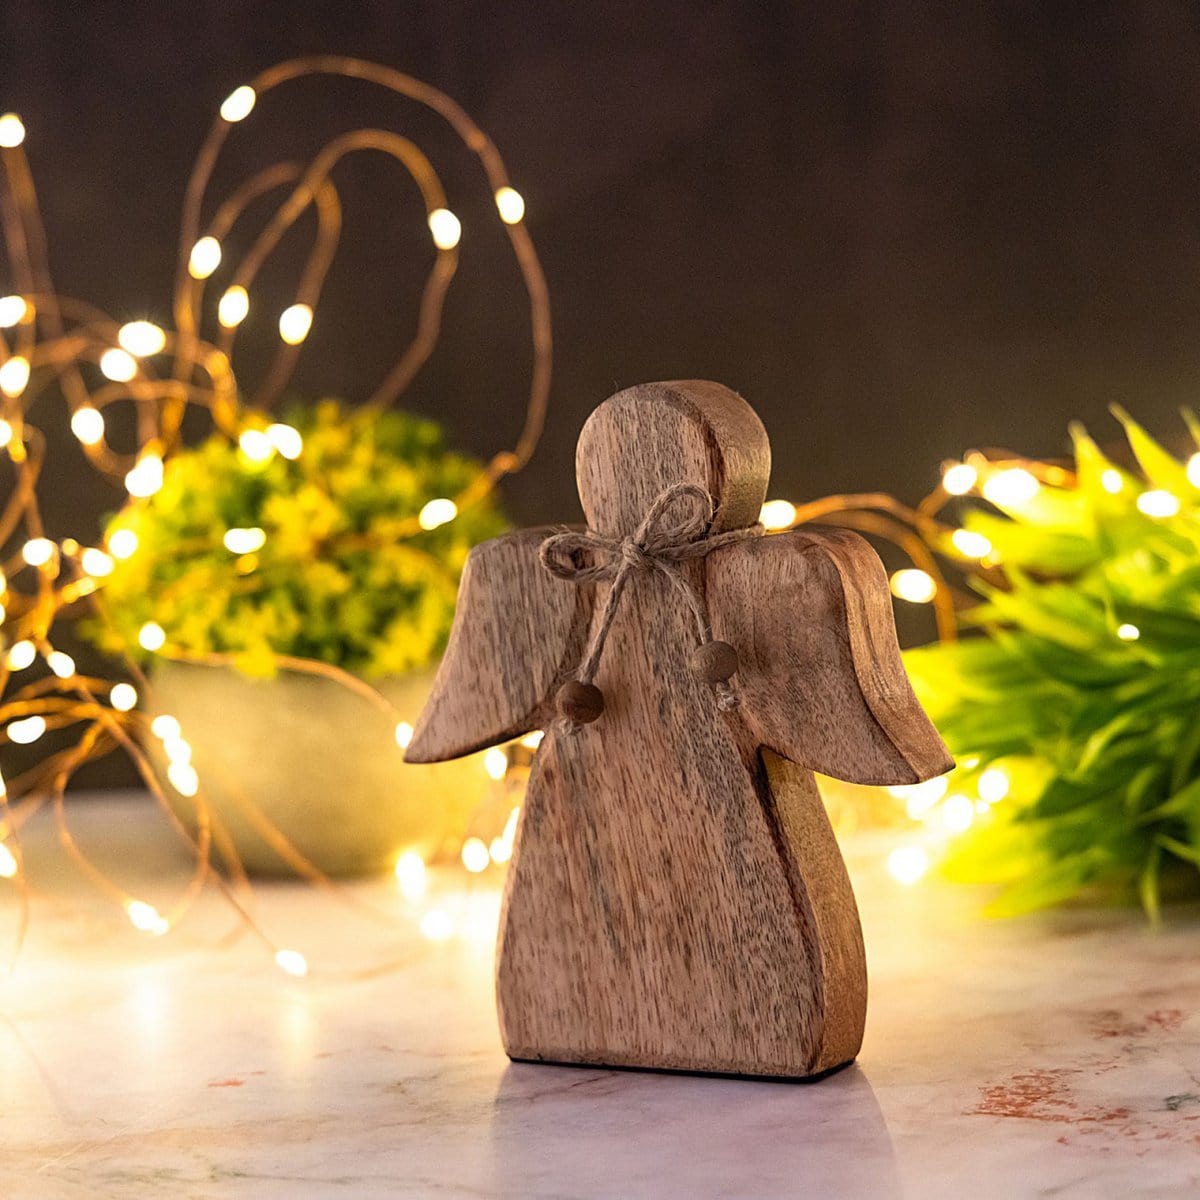 Voglrieder kreatives Wohnen Decoratieve engel houten figuur 15x13cm geluksengel kerstdecoratie mangohout